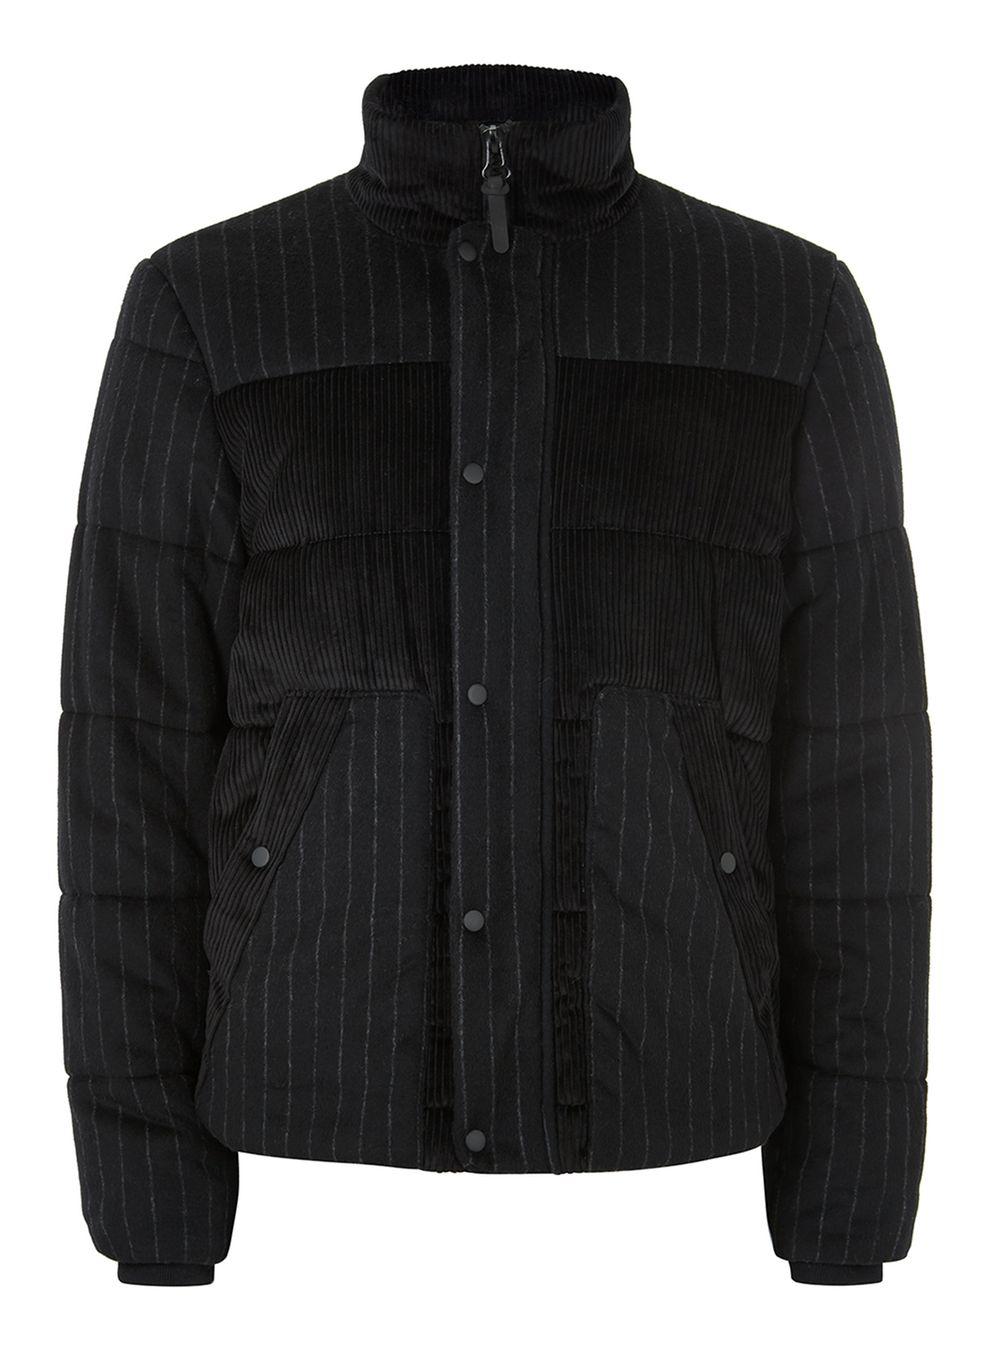 TOPMAN Black Corduroy Puffer Jacket for Men - Lyst